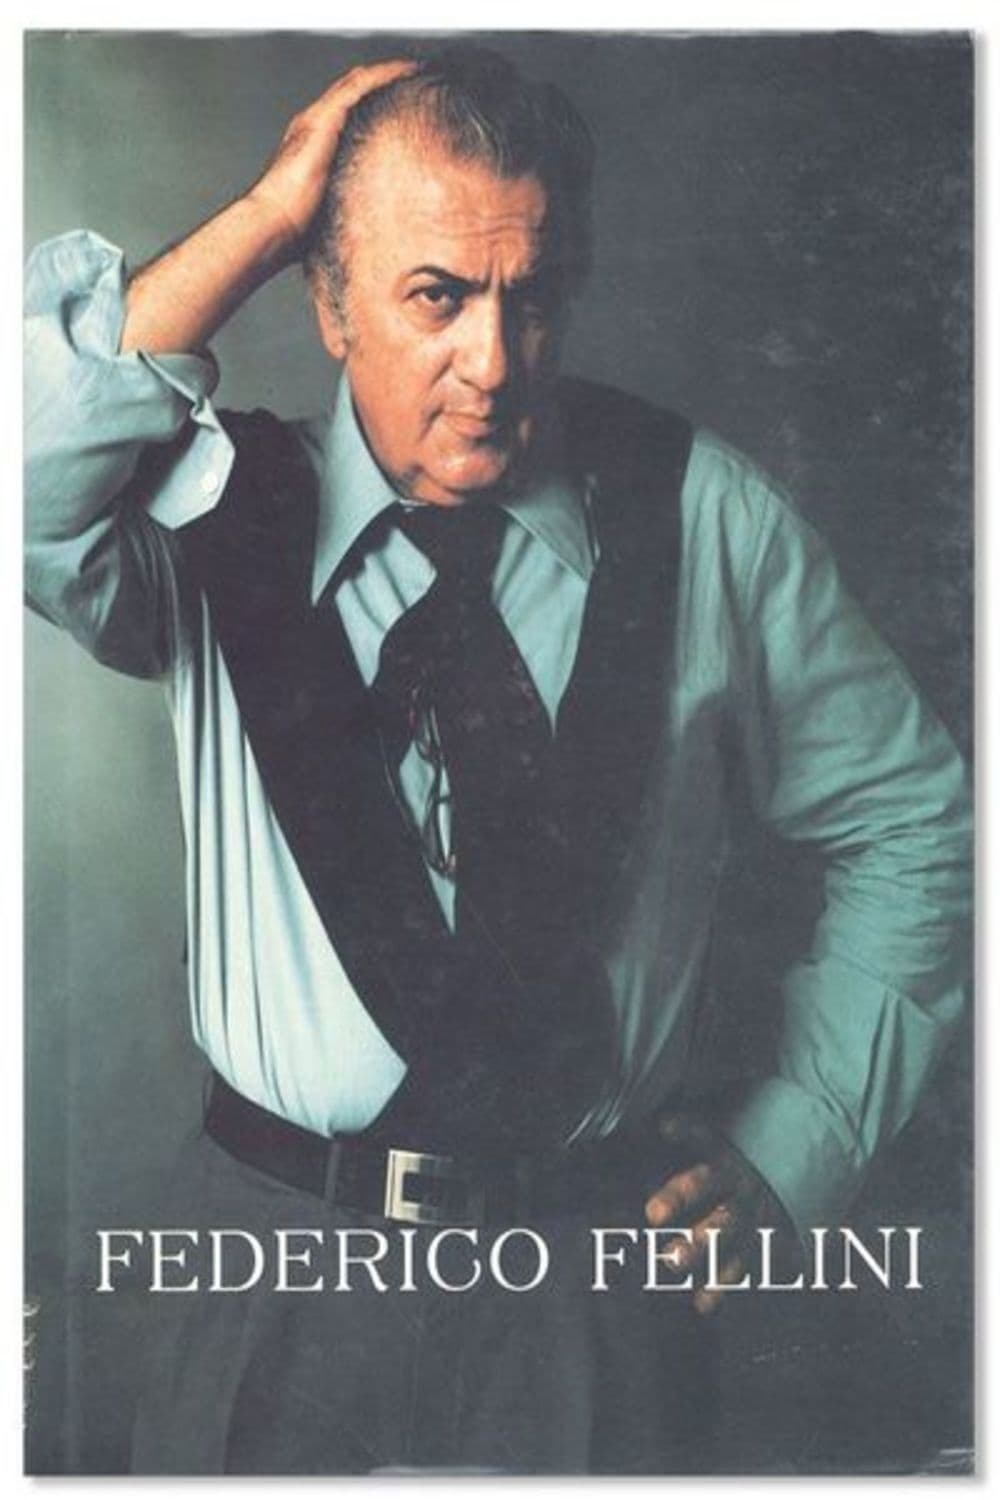 Federico Fellini's Autobiography